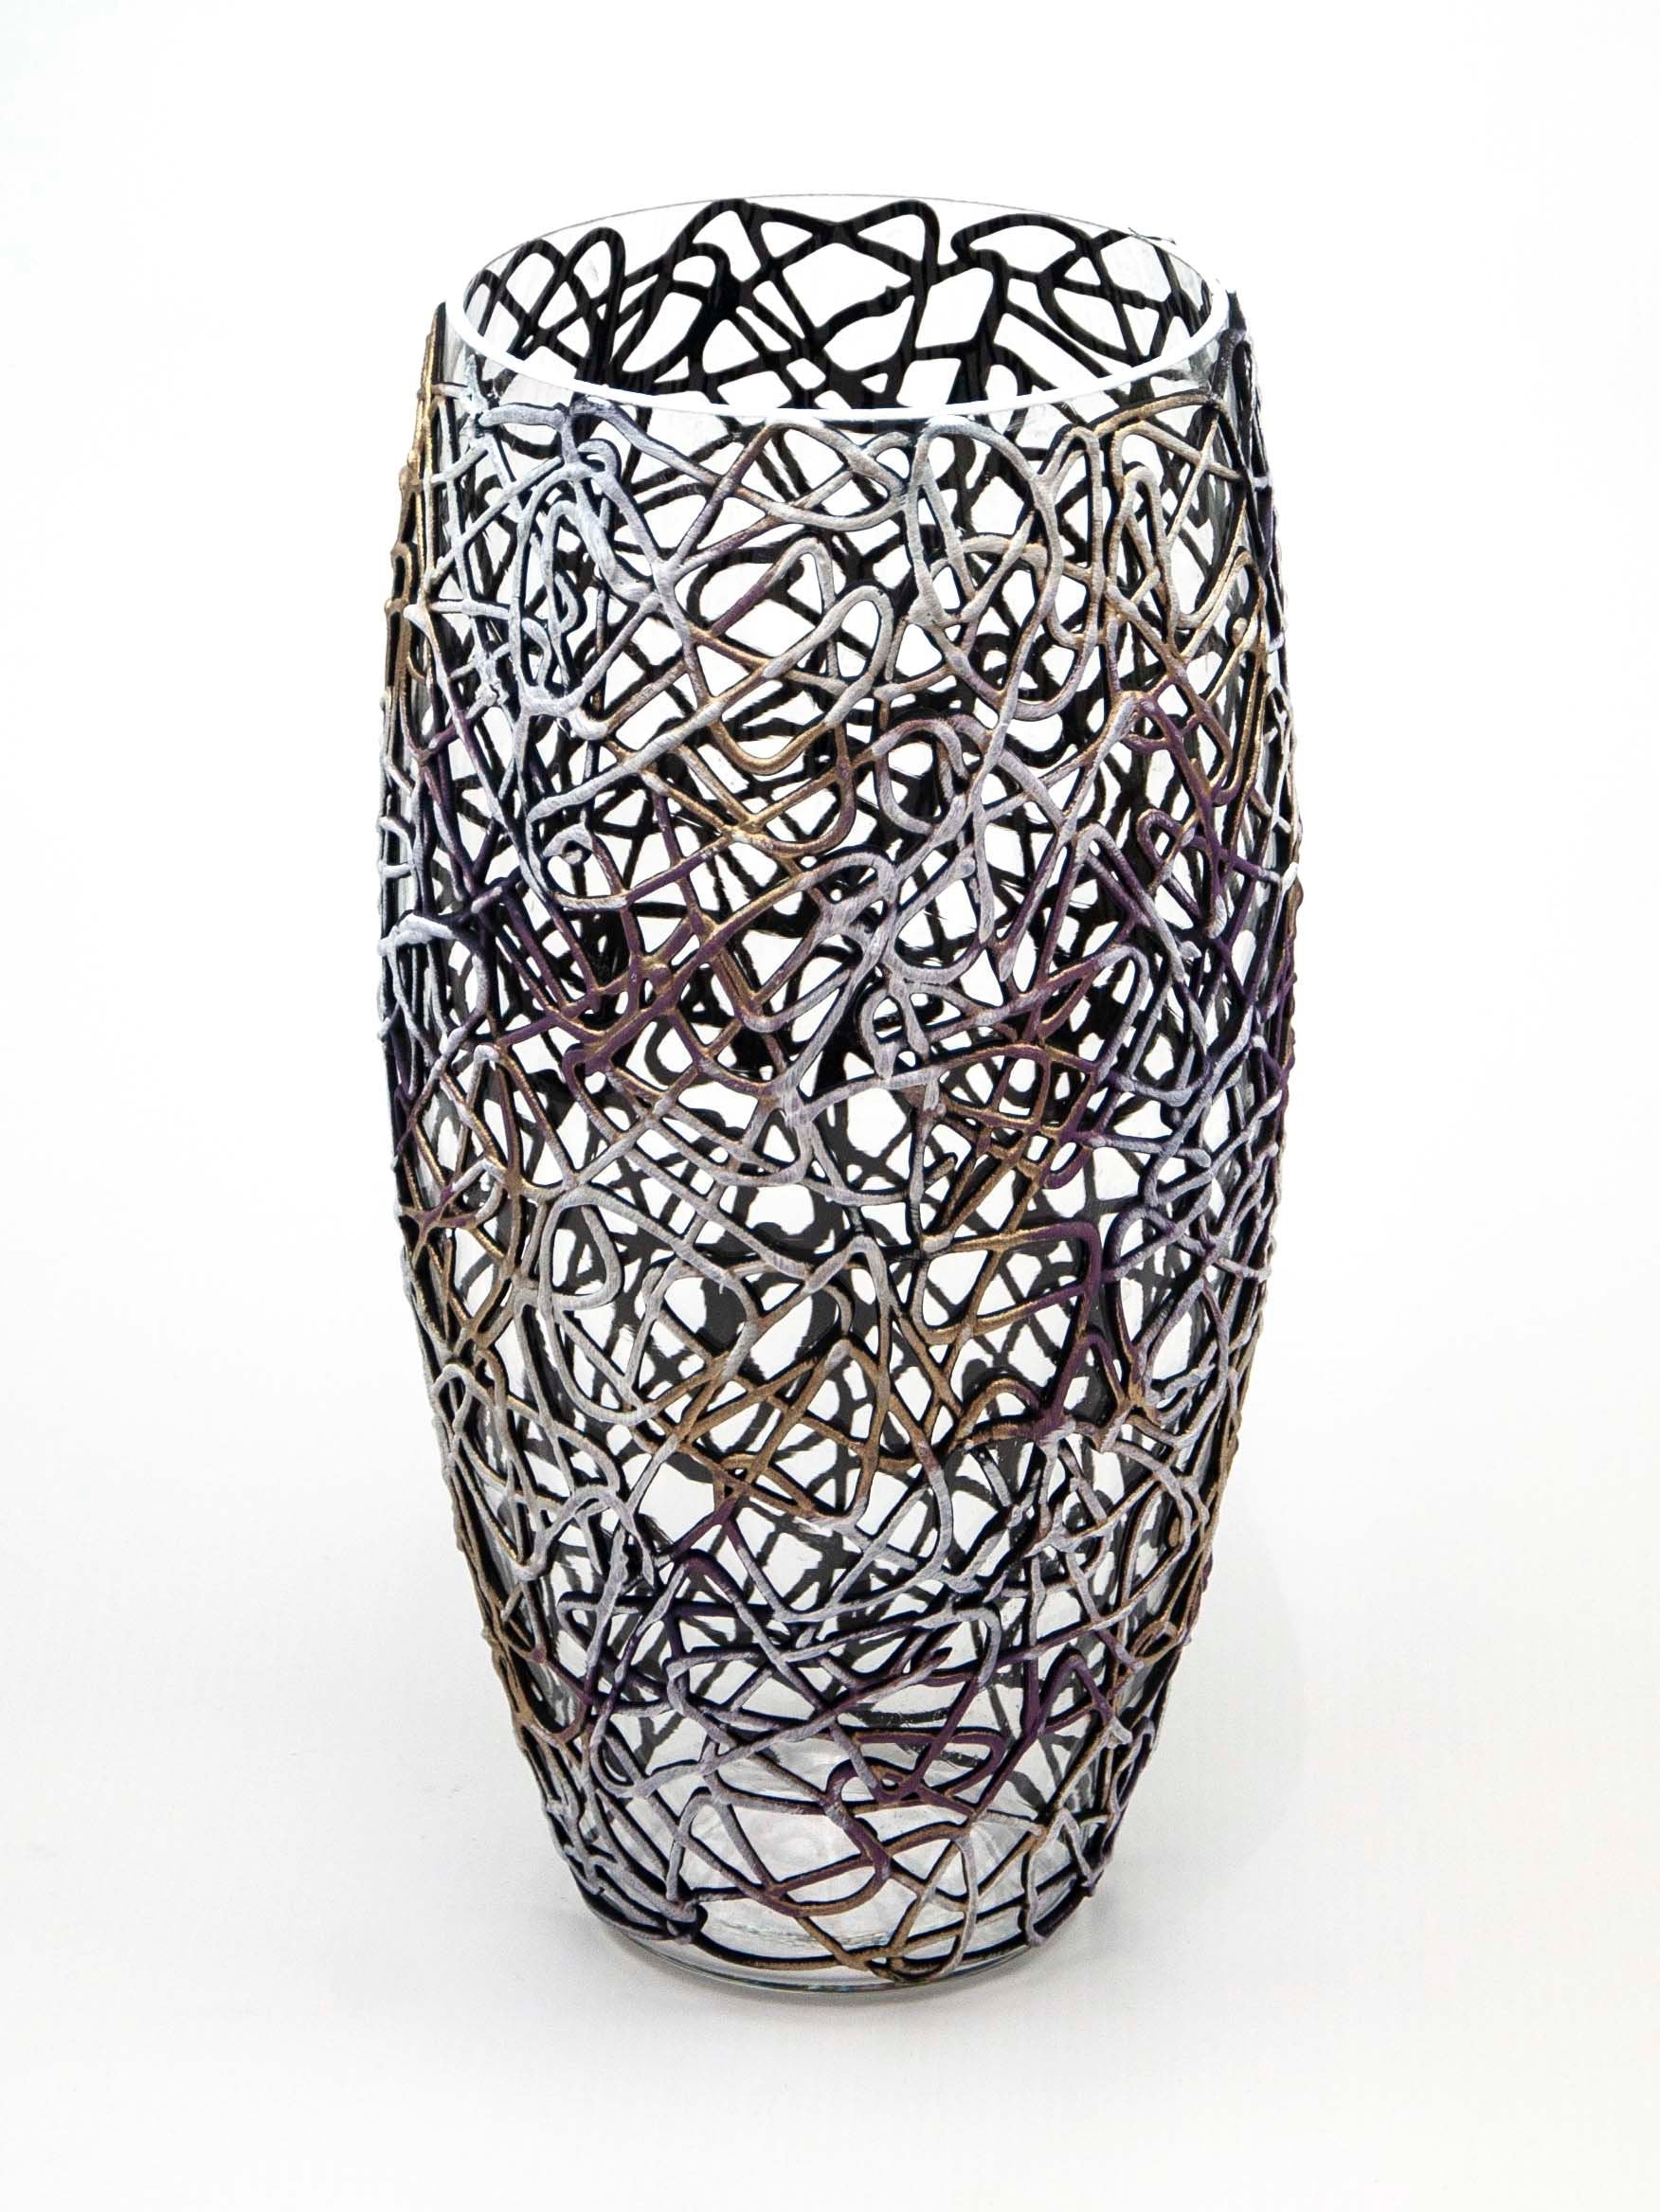 Art Decorated Glass Oval Vase | Interior Design Home Room Decor | Table vase 12 inch-2